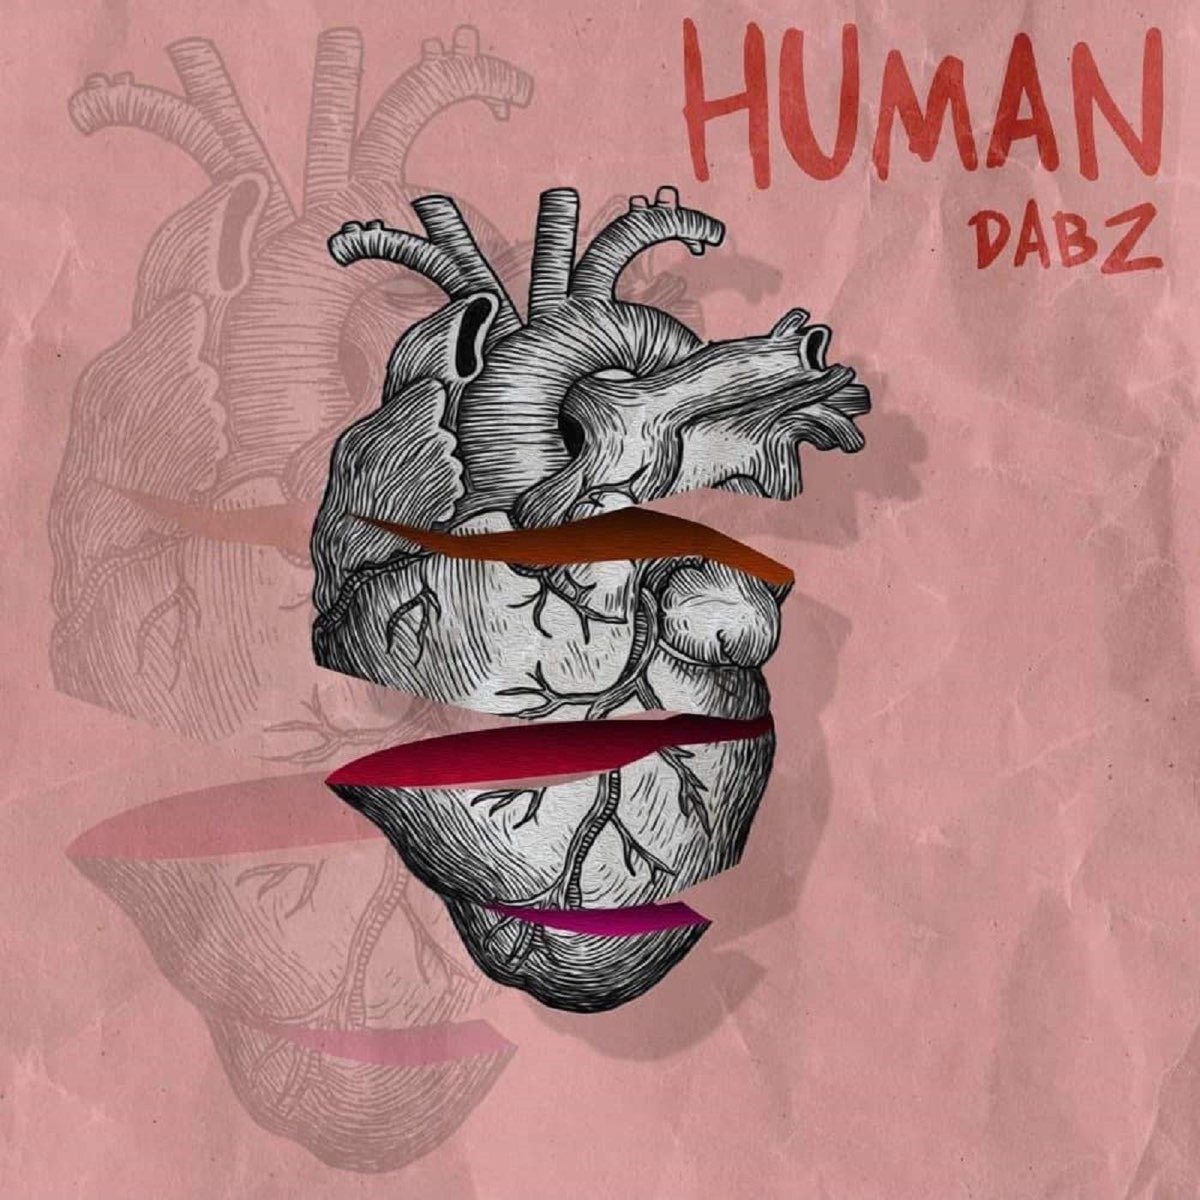 Human альбомы. Human album. Those bitches Love Benzy. Human mp3